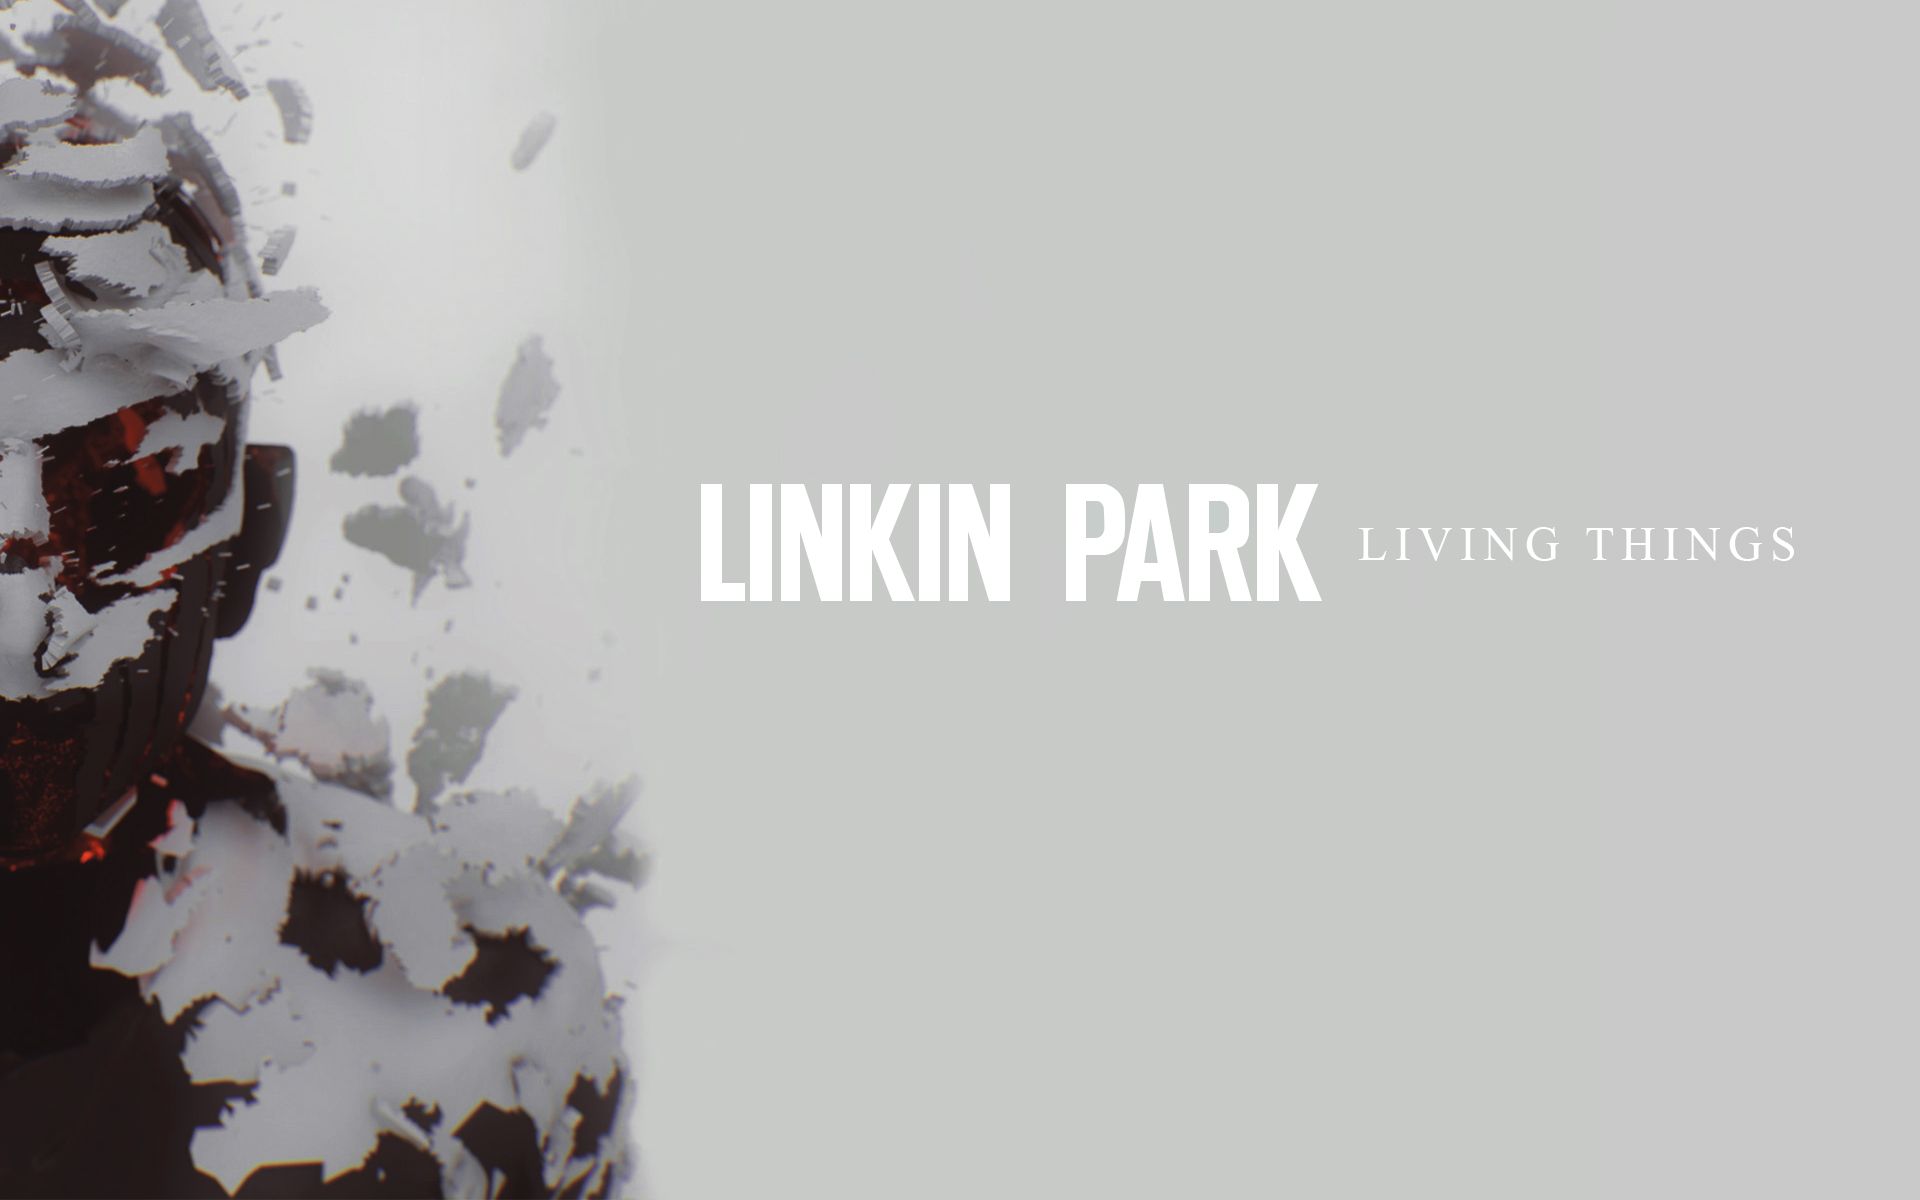 HD wallpaper, Things, Linkin, Living, Park